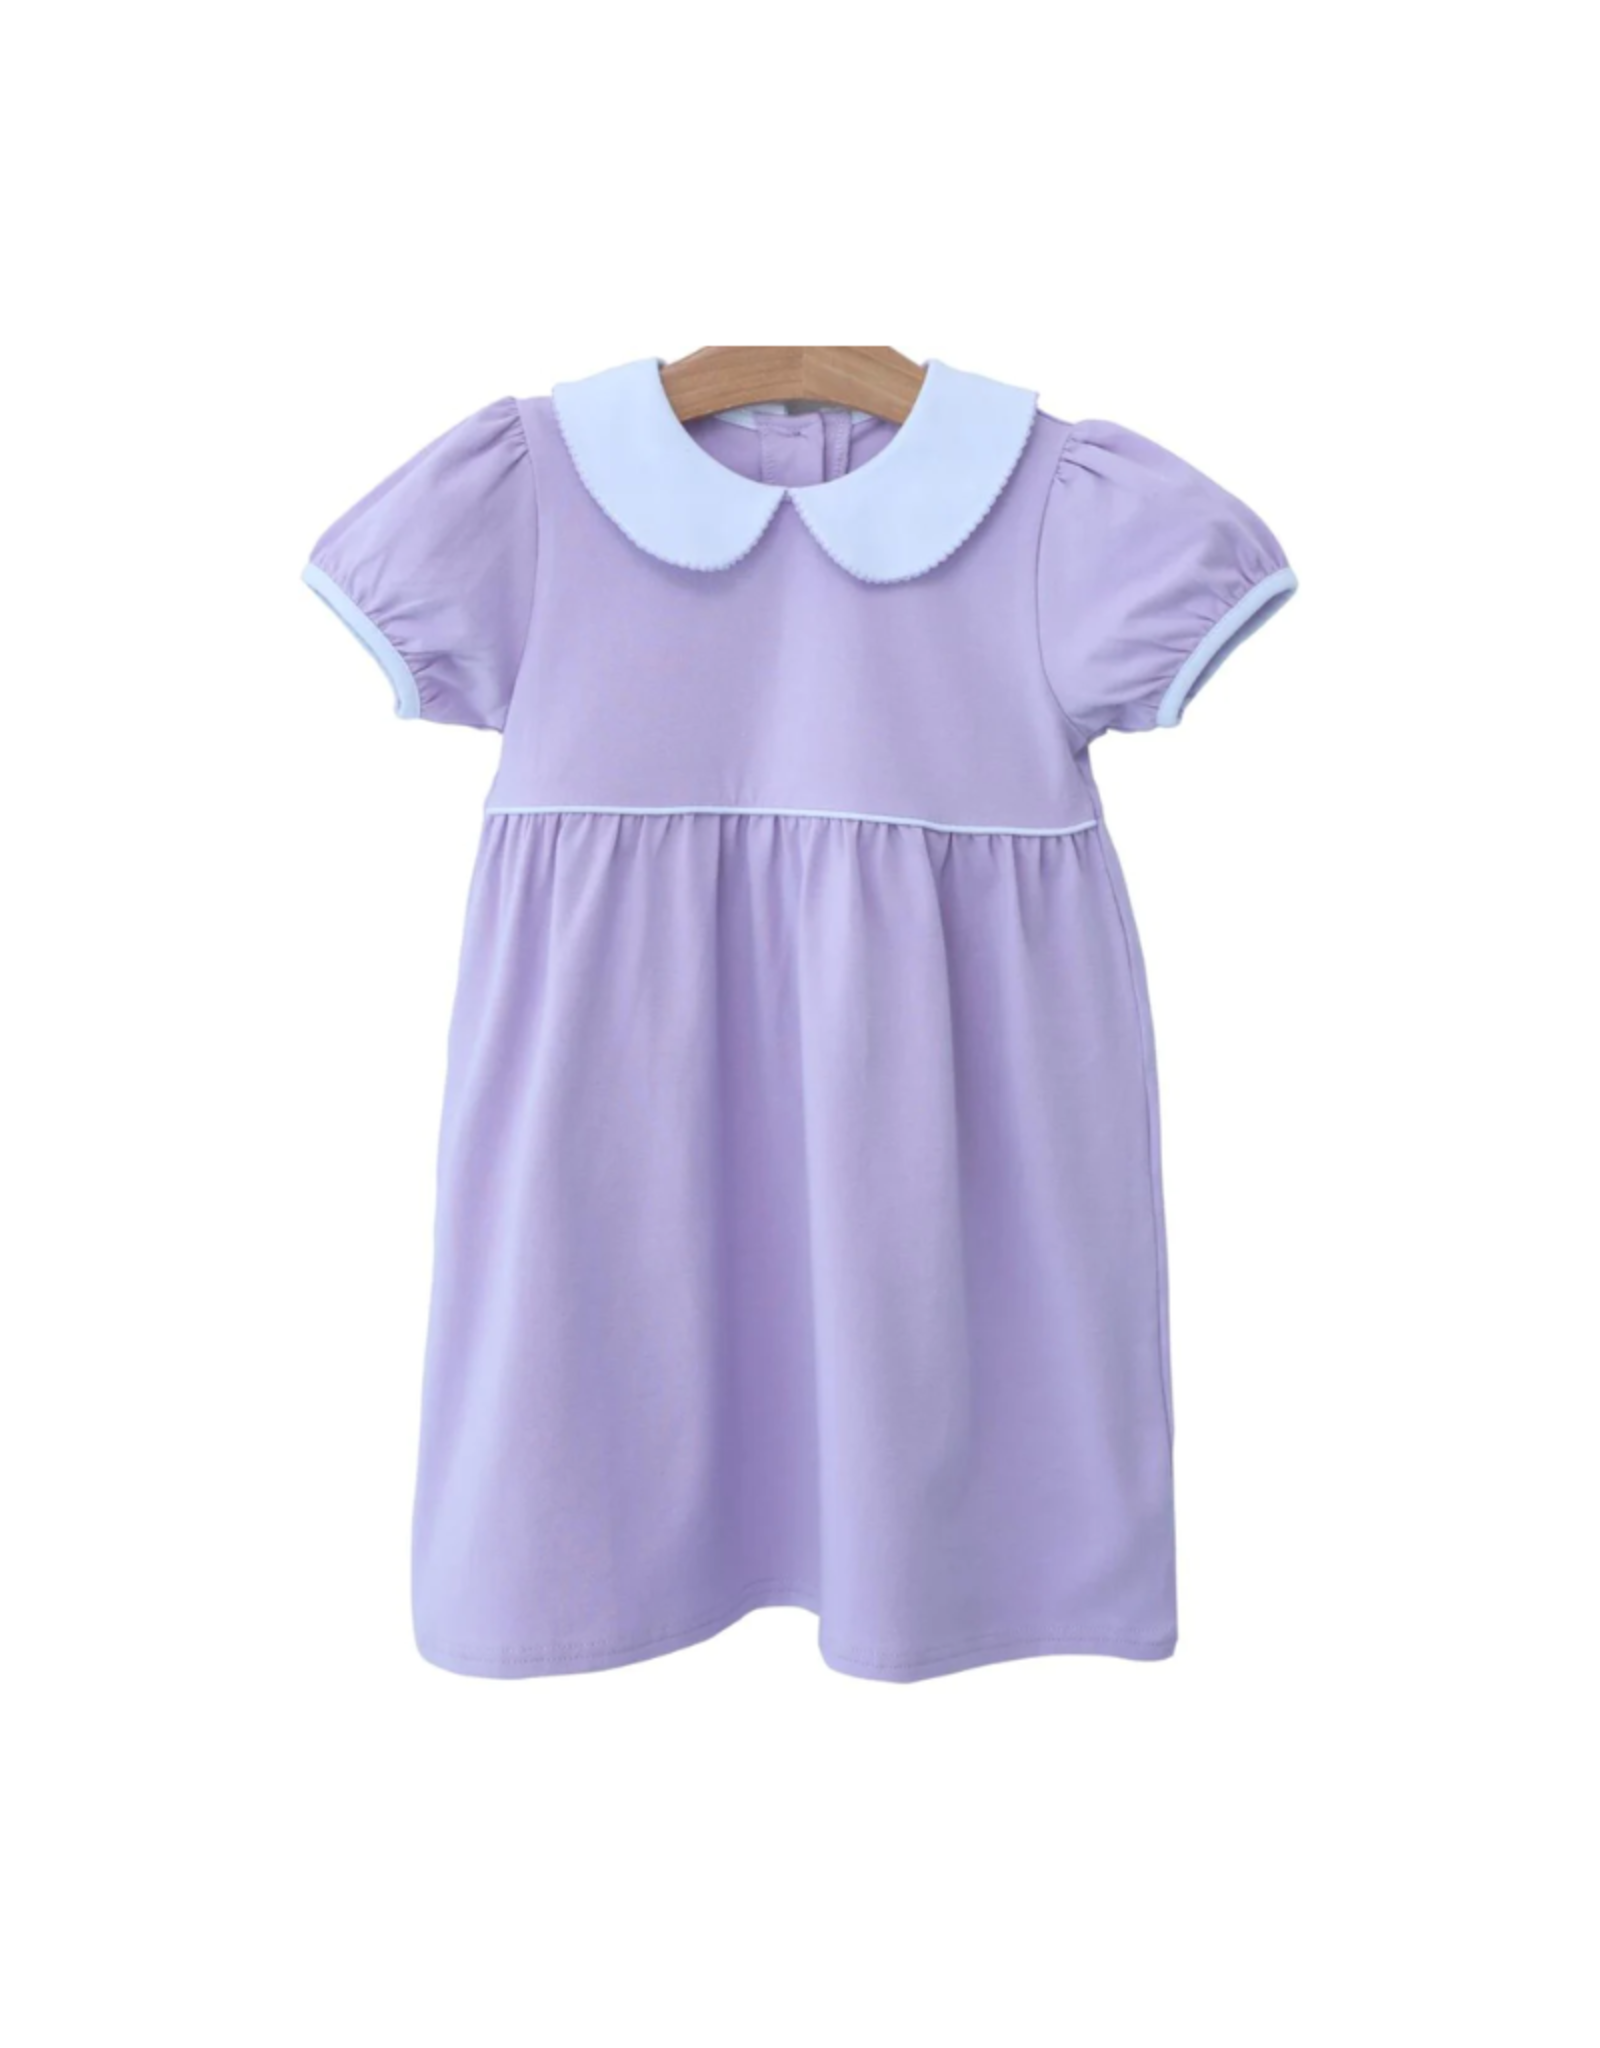 Trotter Street Kids Eloise Dress, Lavender